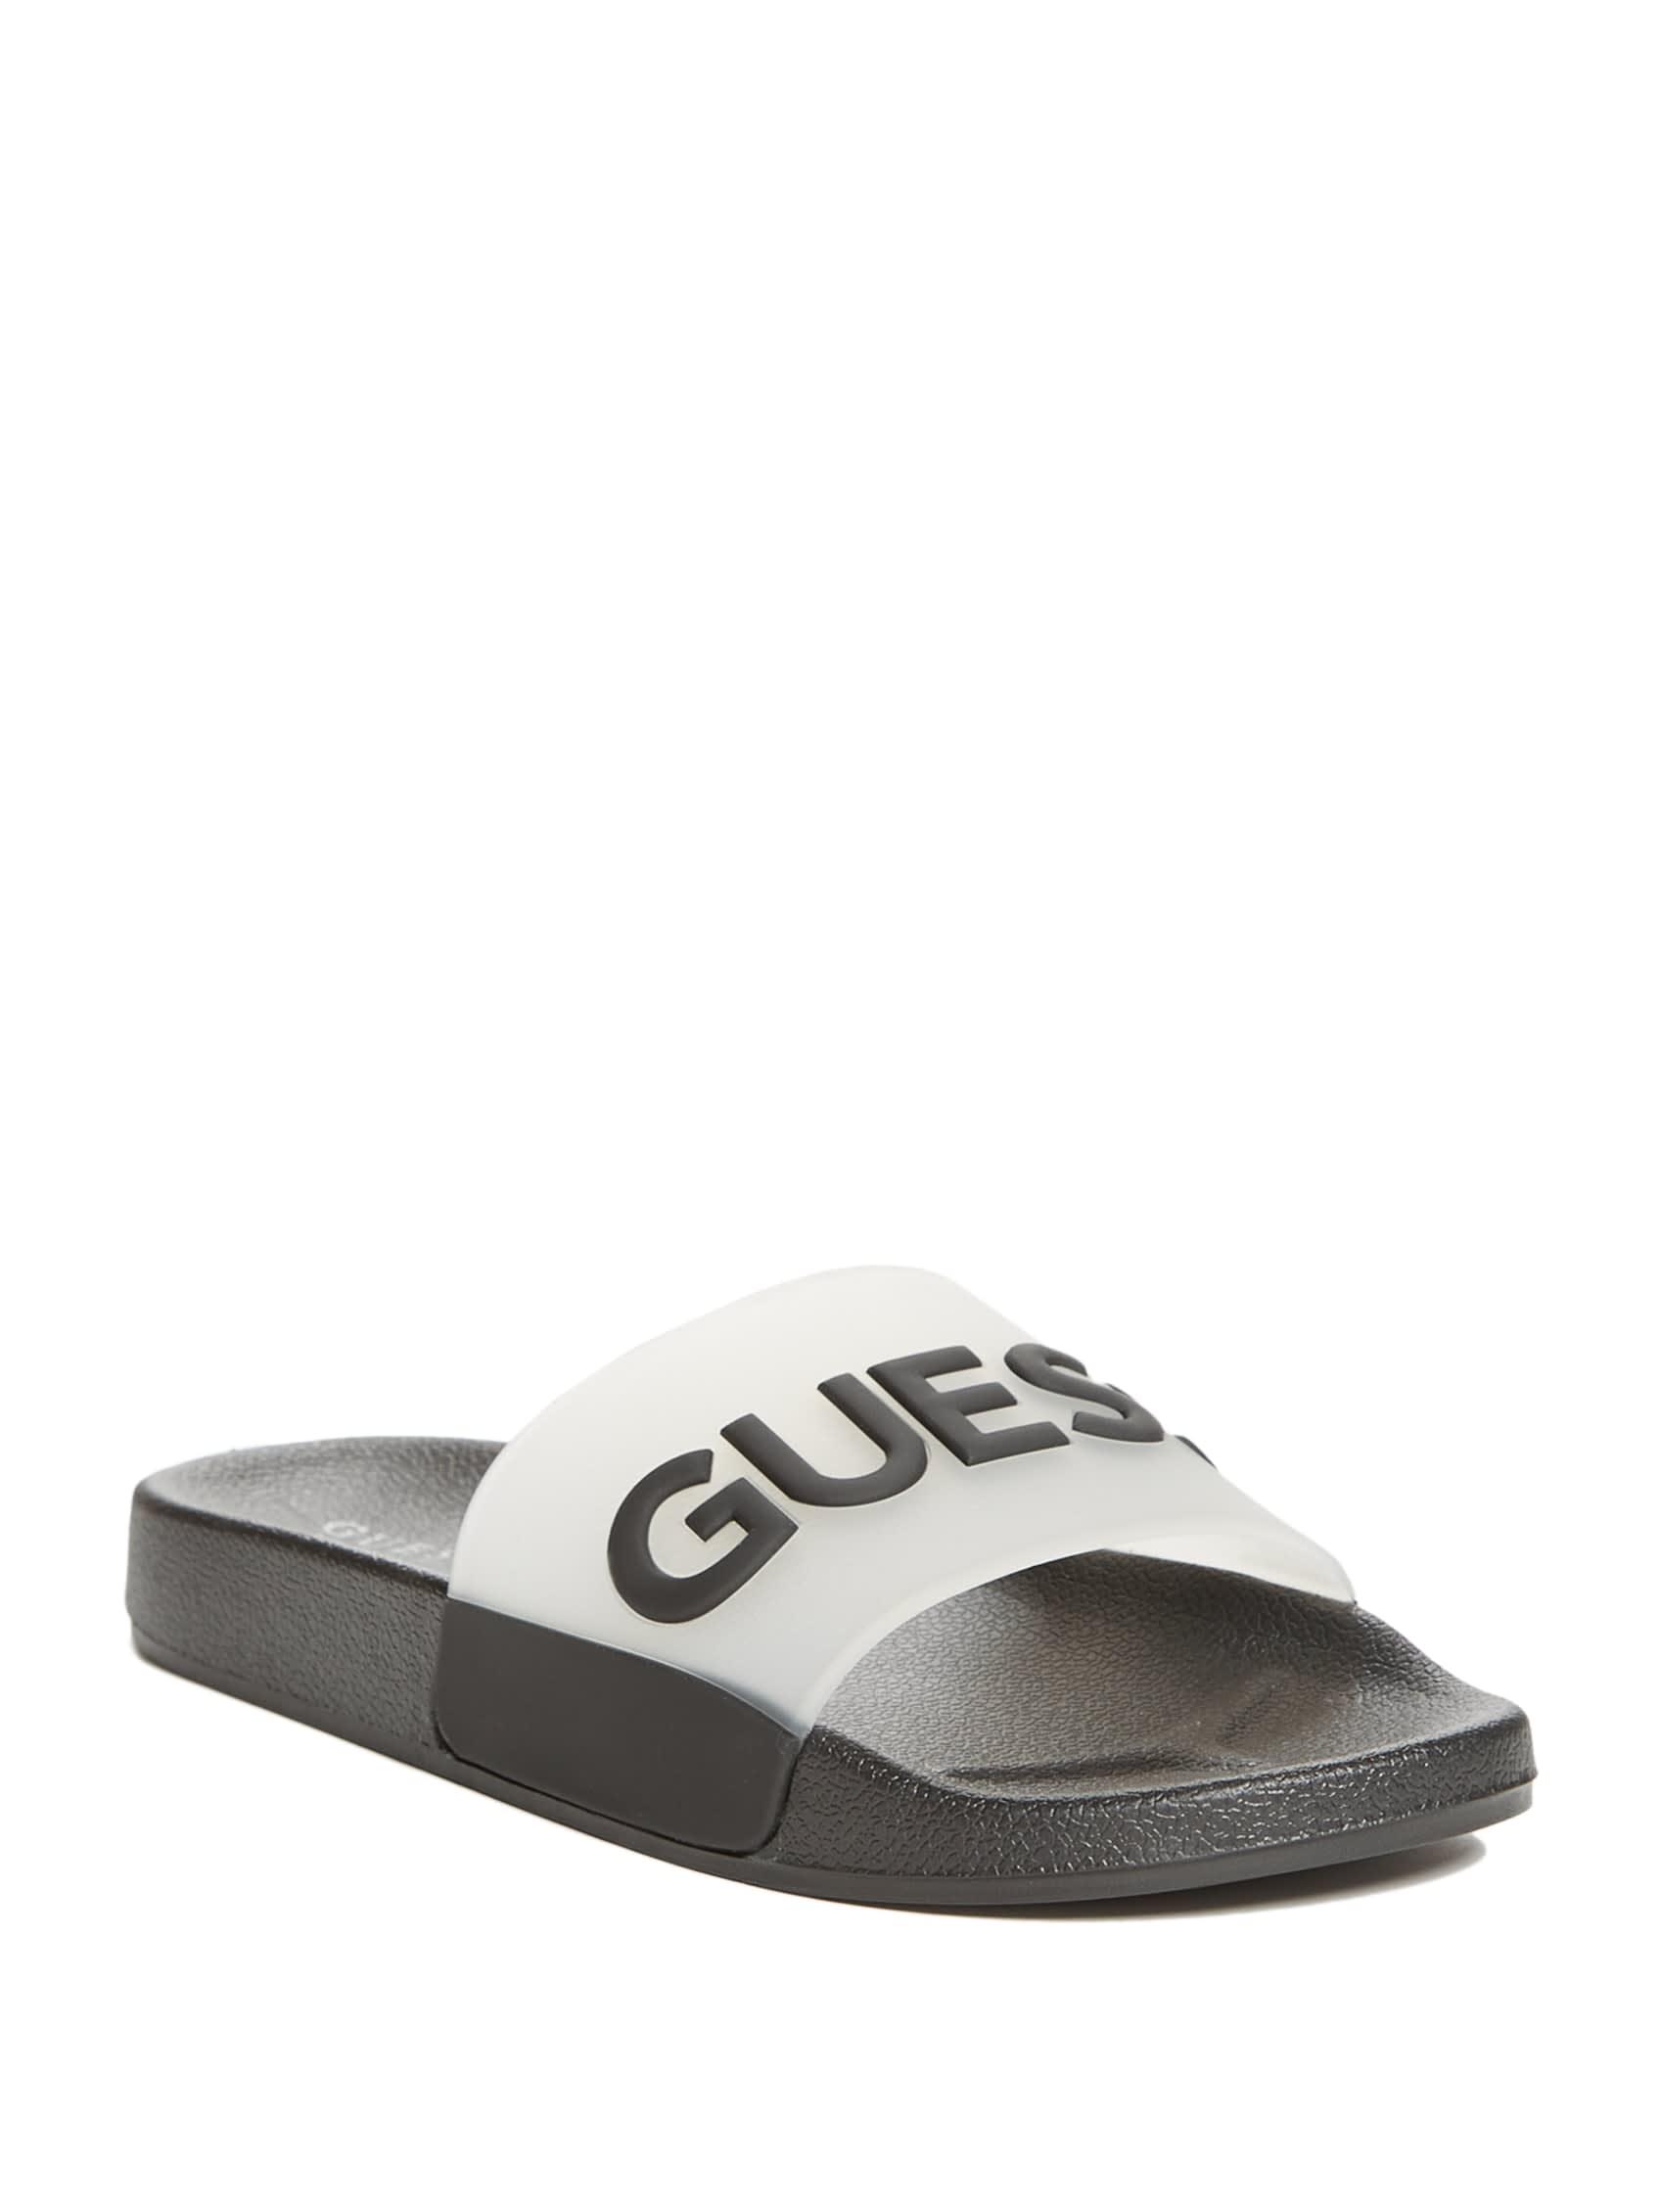 Guess Factory Lana Logo Slide Sandals in Black | Lyst